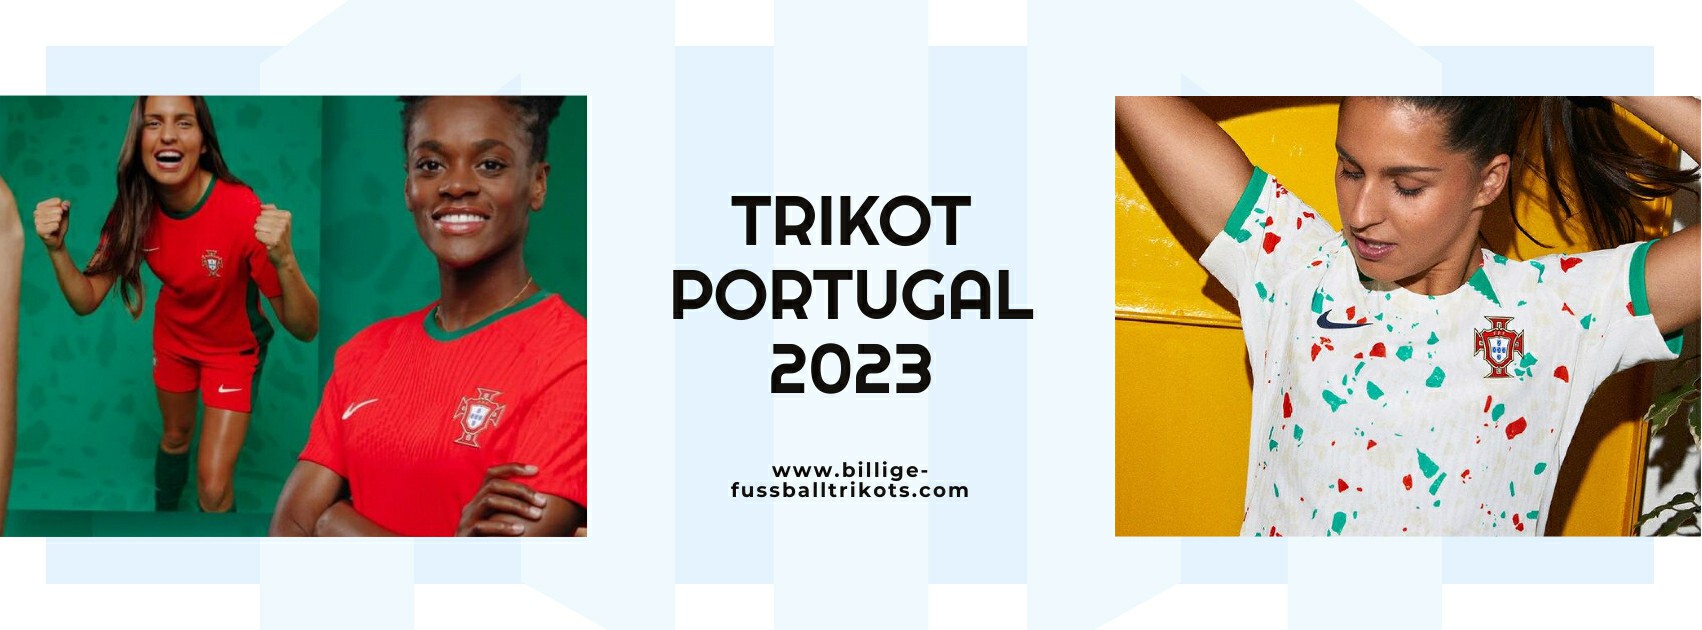 Portugal Trikot 2023-2024